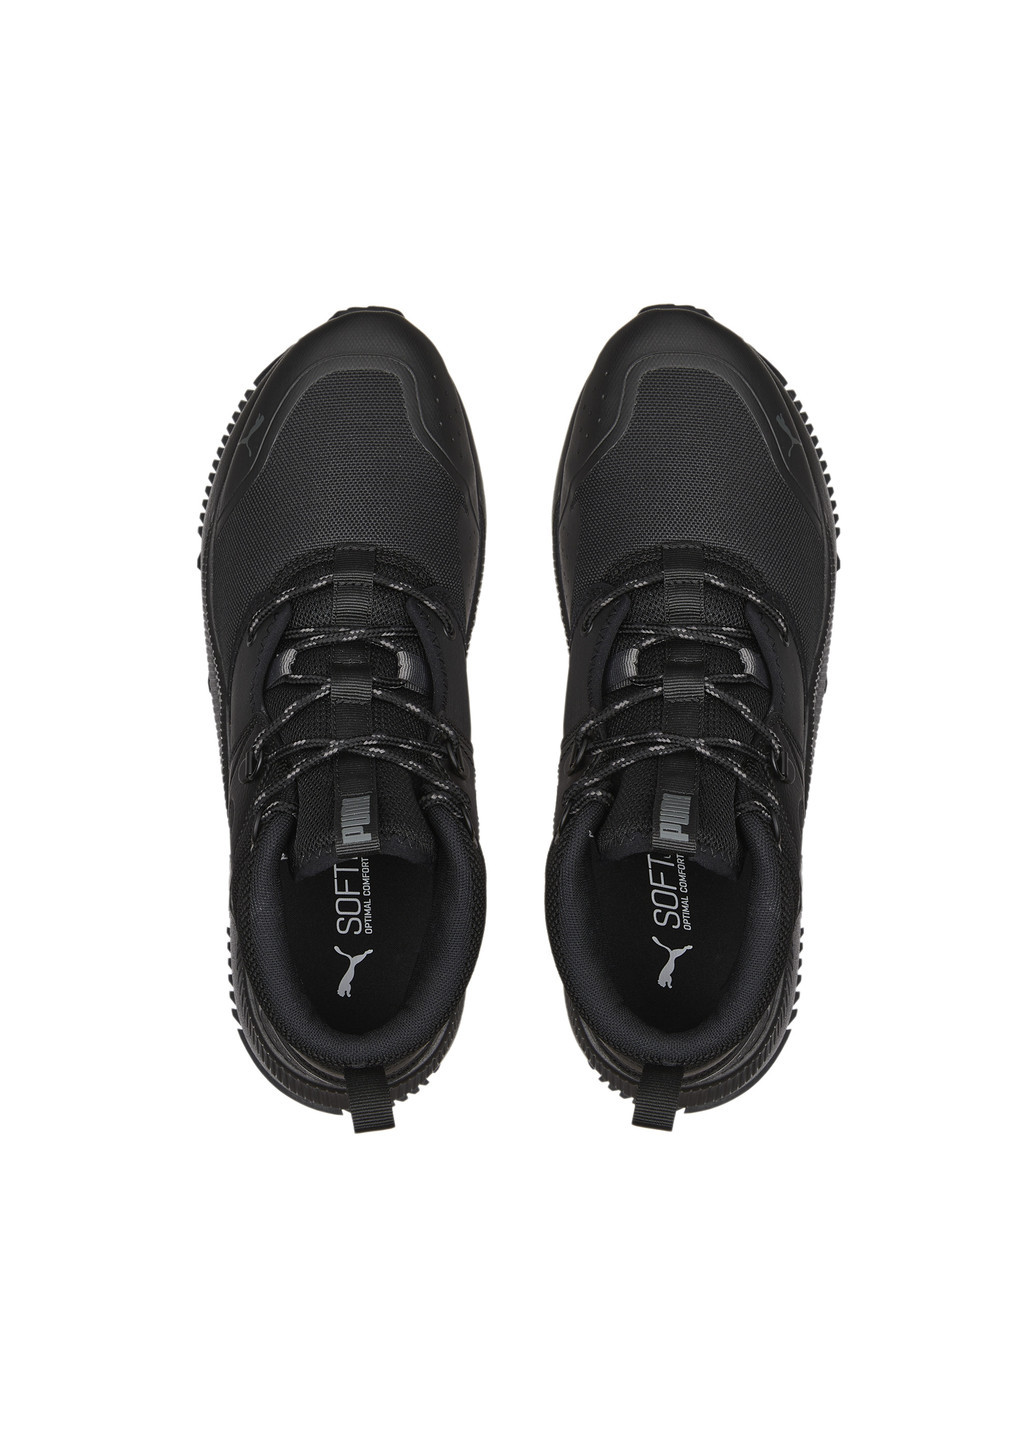 Черные кроссовки pacer future tr mid sneakers Puma